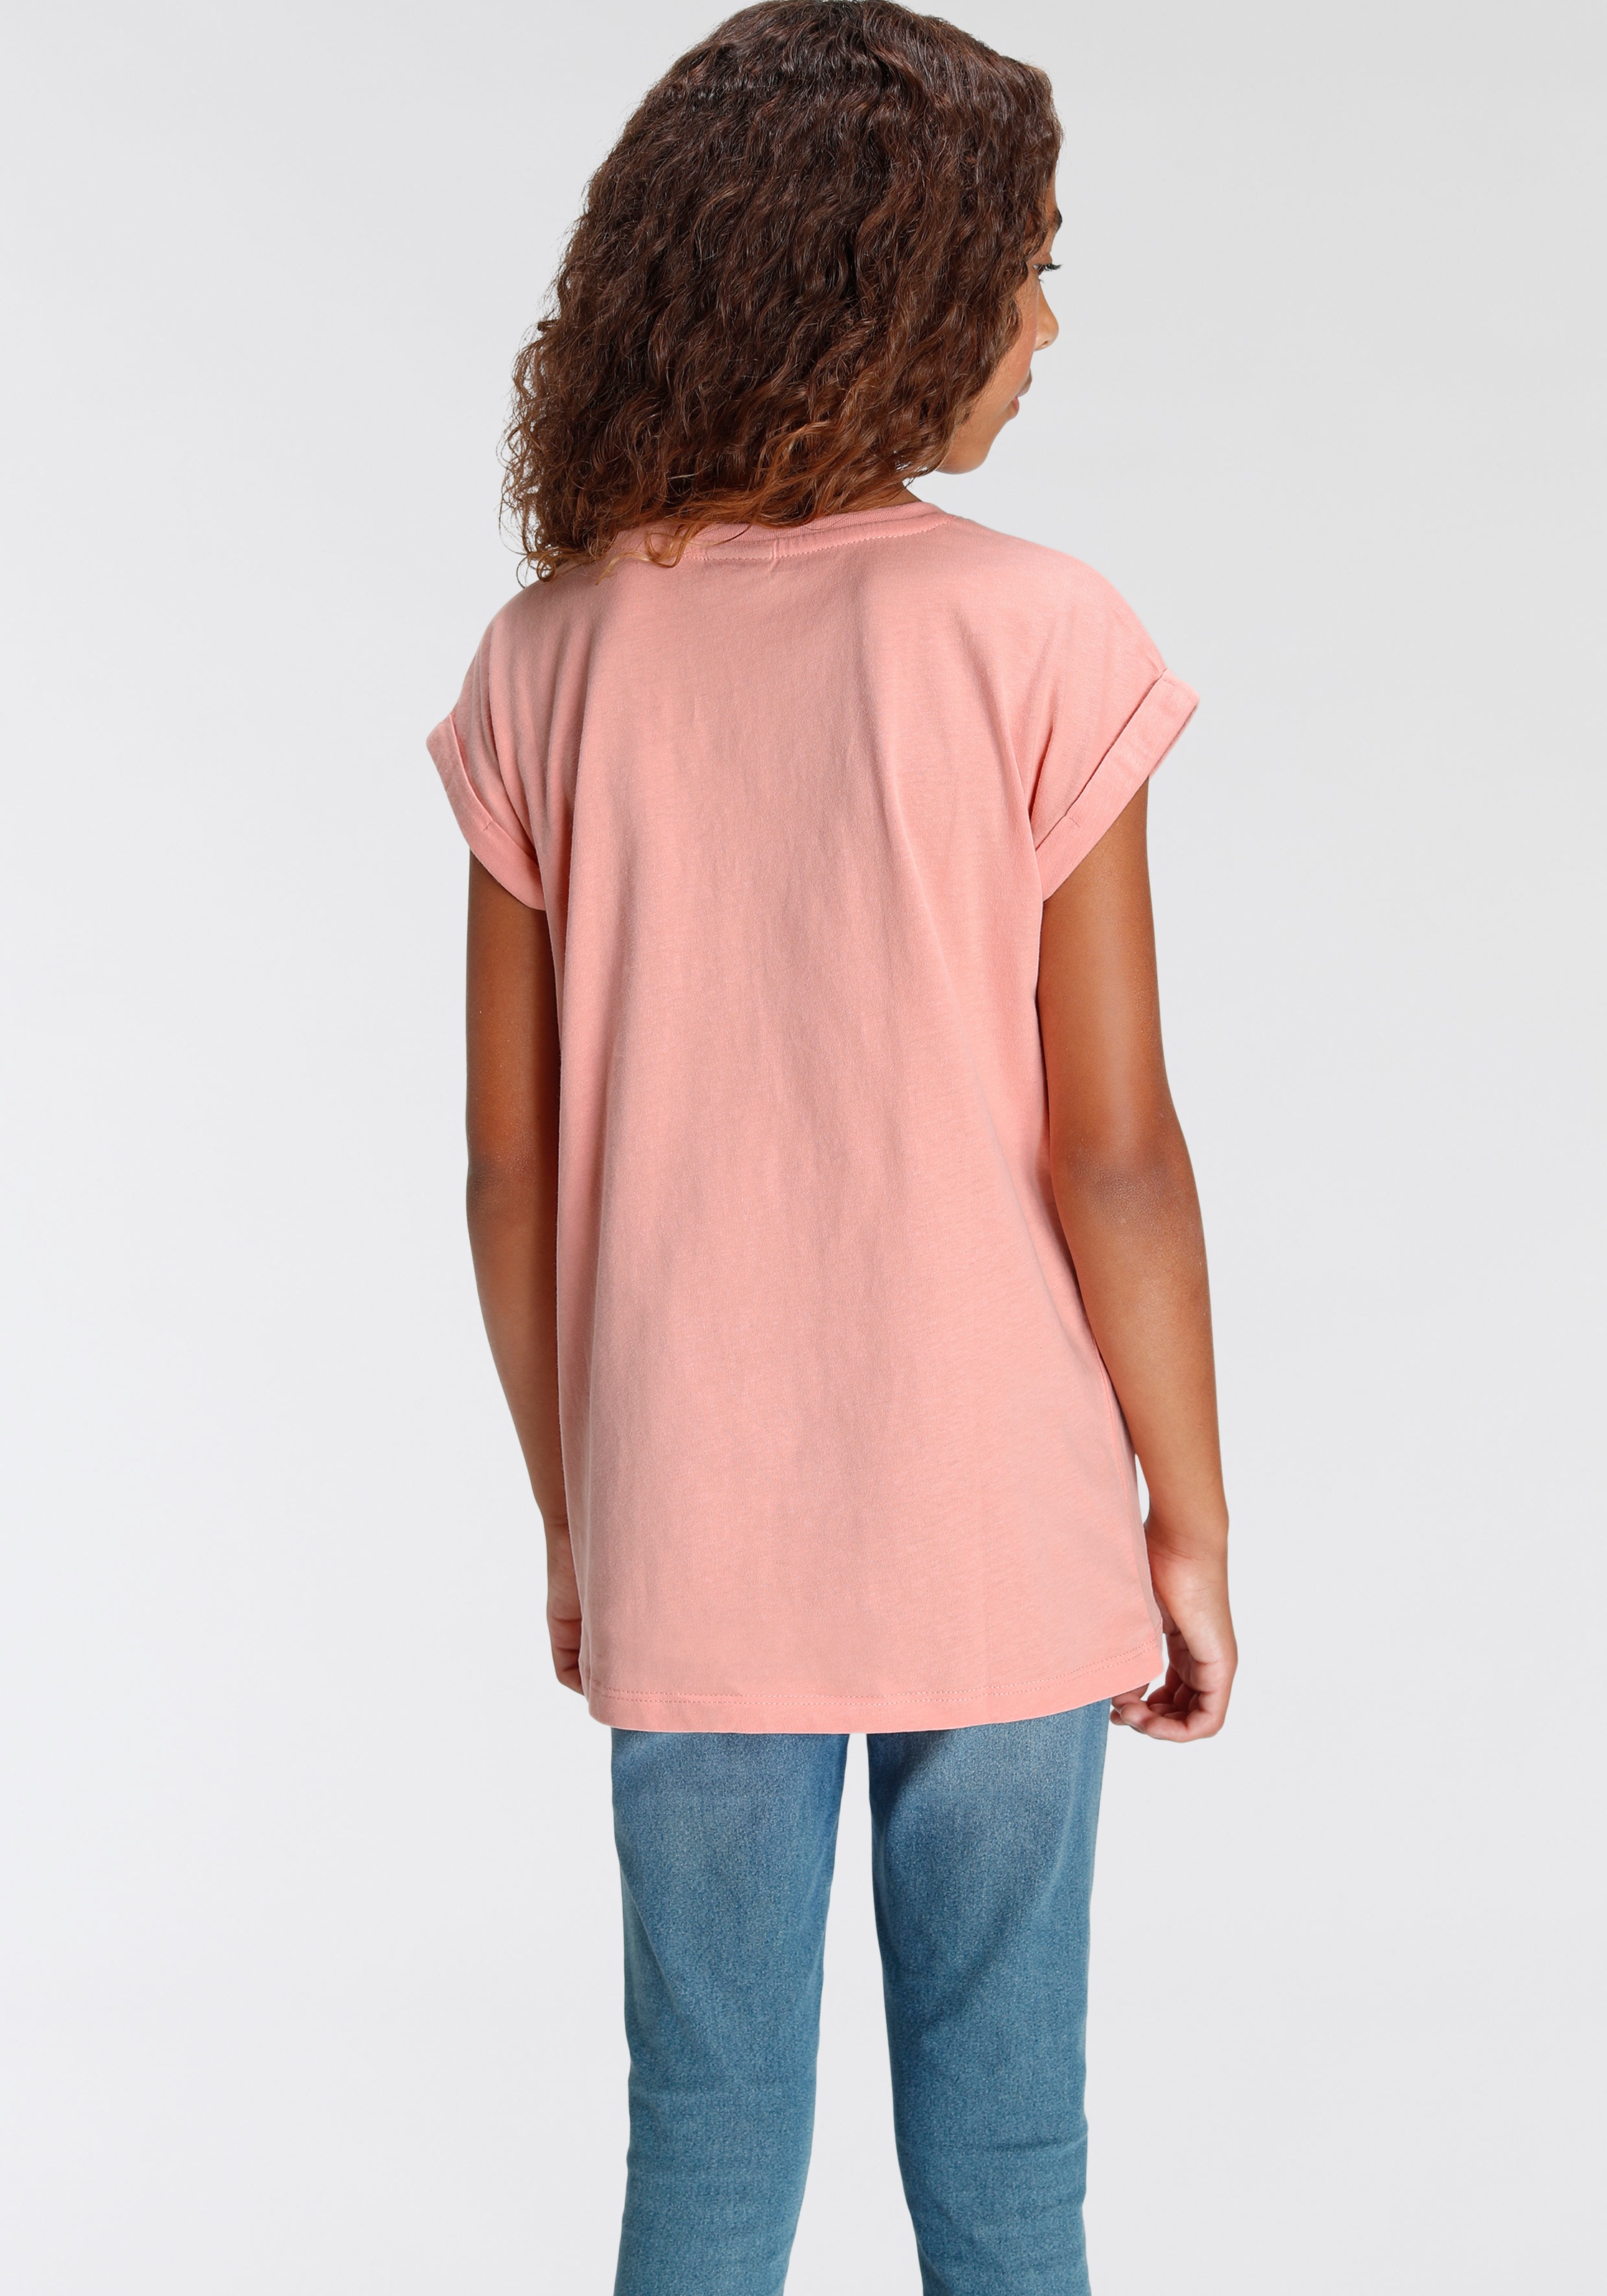 KIDSWORLD T-Shirt »Be Form legerer kaufen in OTTO fabulous«, bei weiter